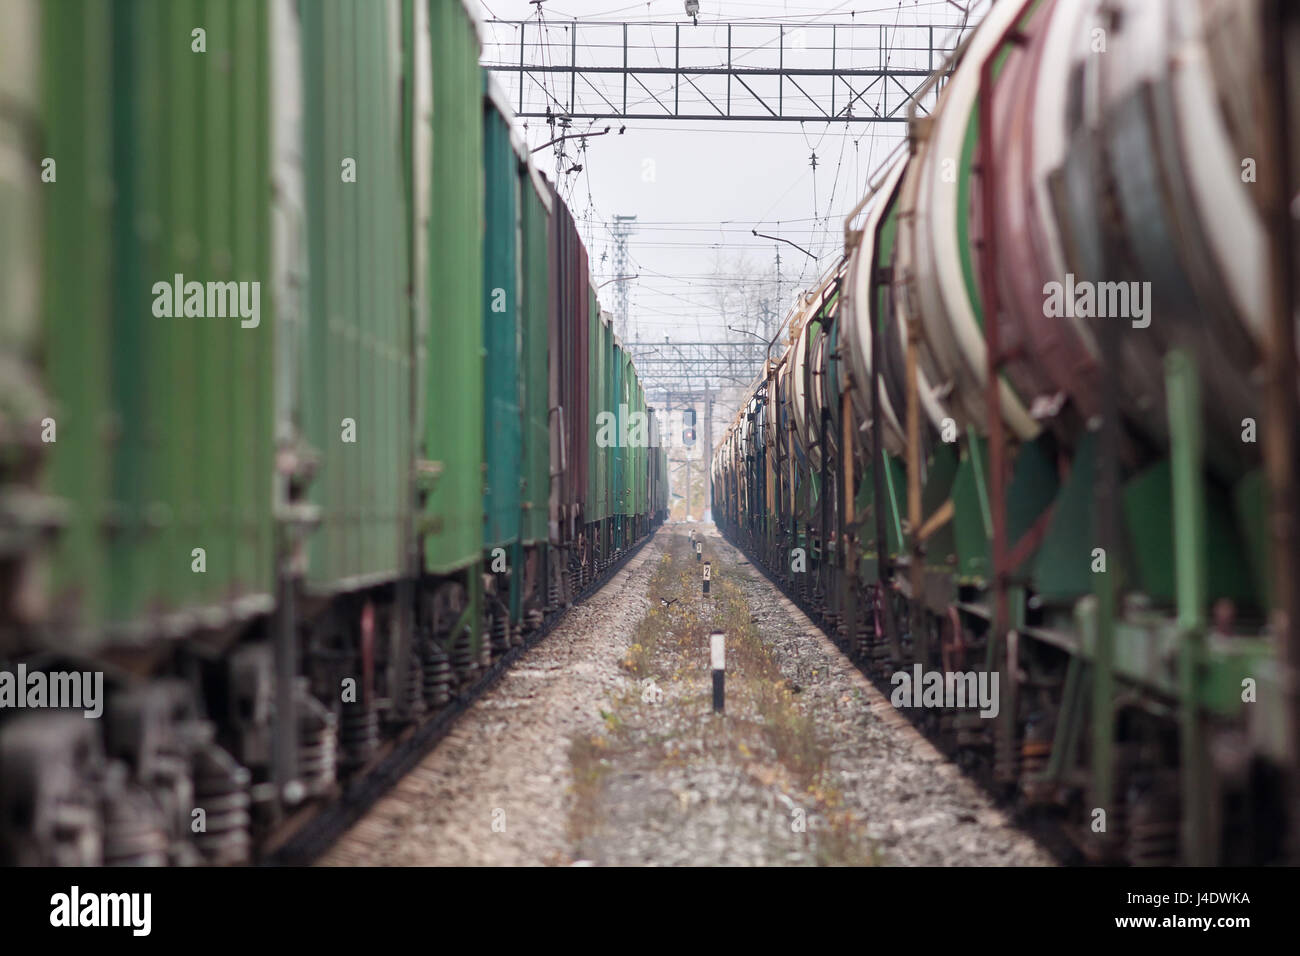 Güterzüge im Bahnhof (selektiven Fokus verwendet) Stockfoto